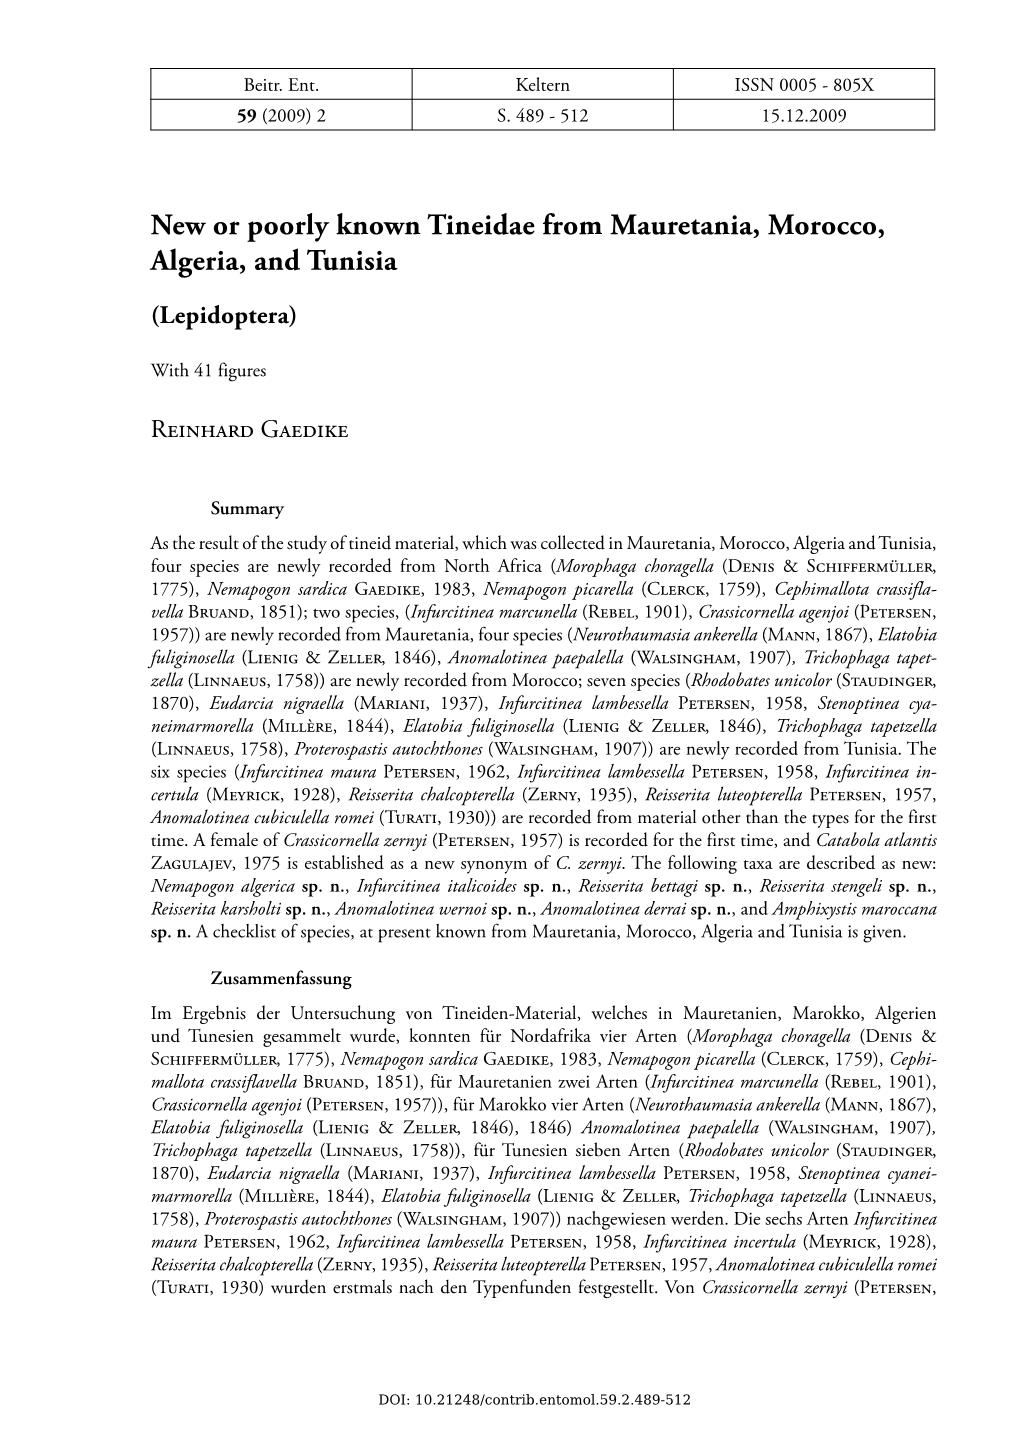 New Or Poorly Known Tineidae from Mauretania, Morocco, Algeria, and Tunisia